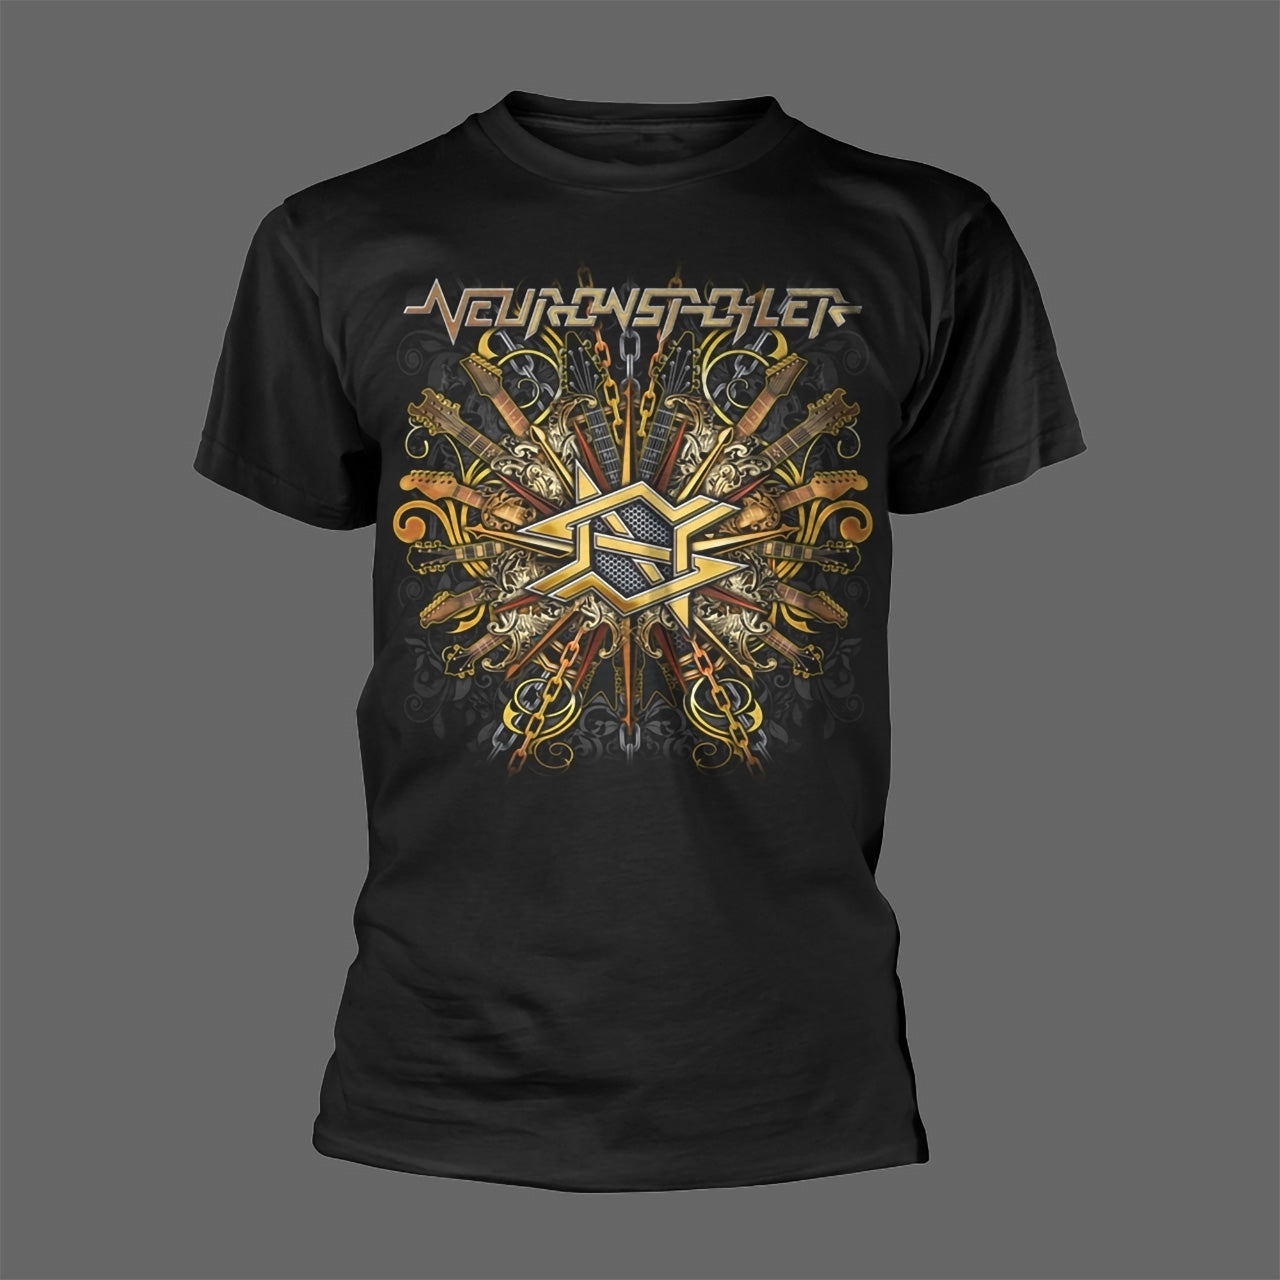 Neuronspoiler - Rock n Roll is King (T-Shirt)